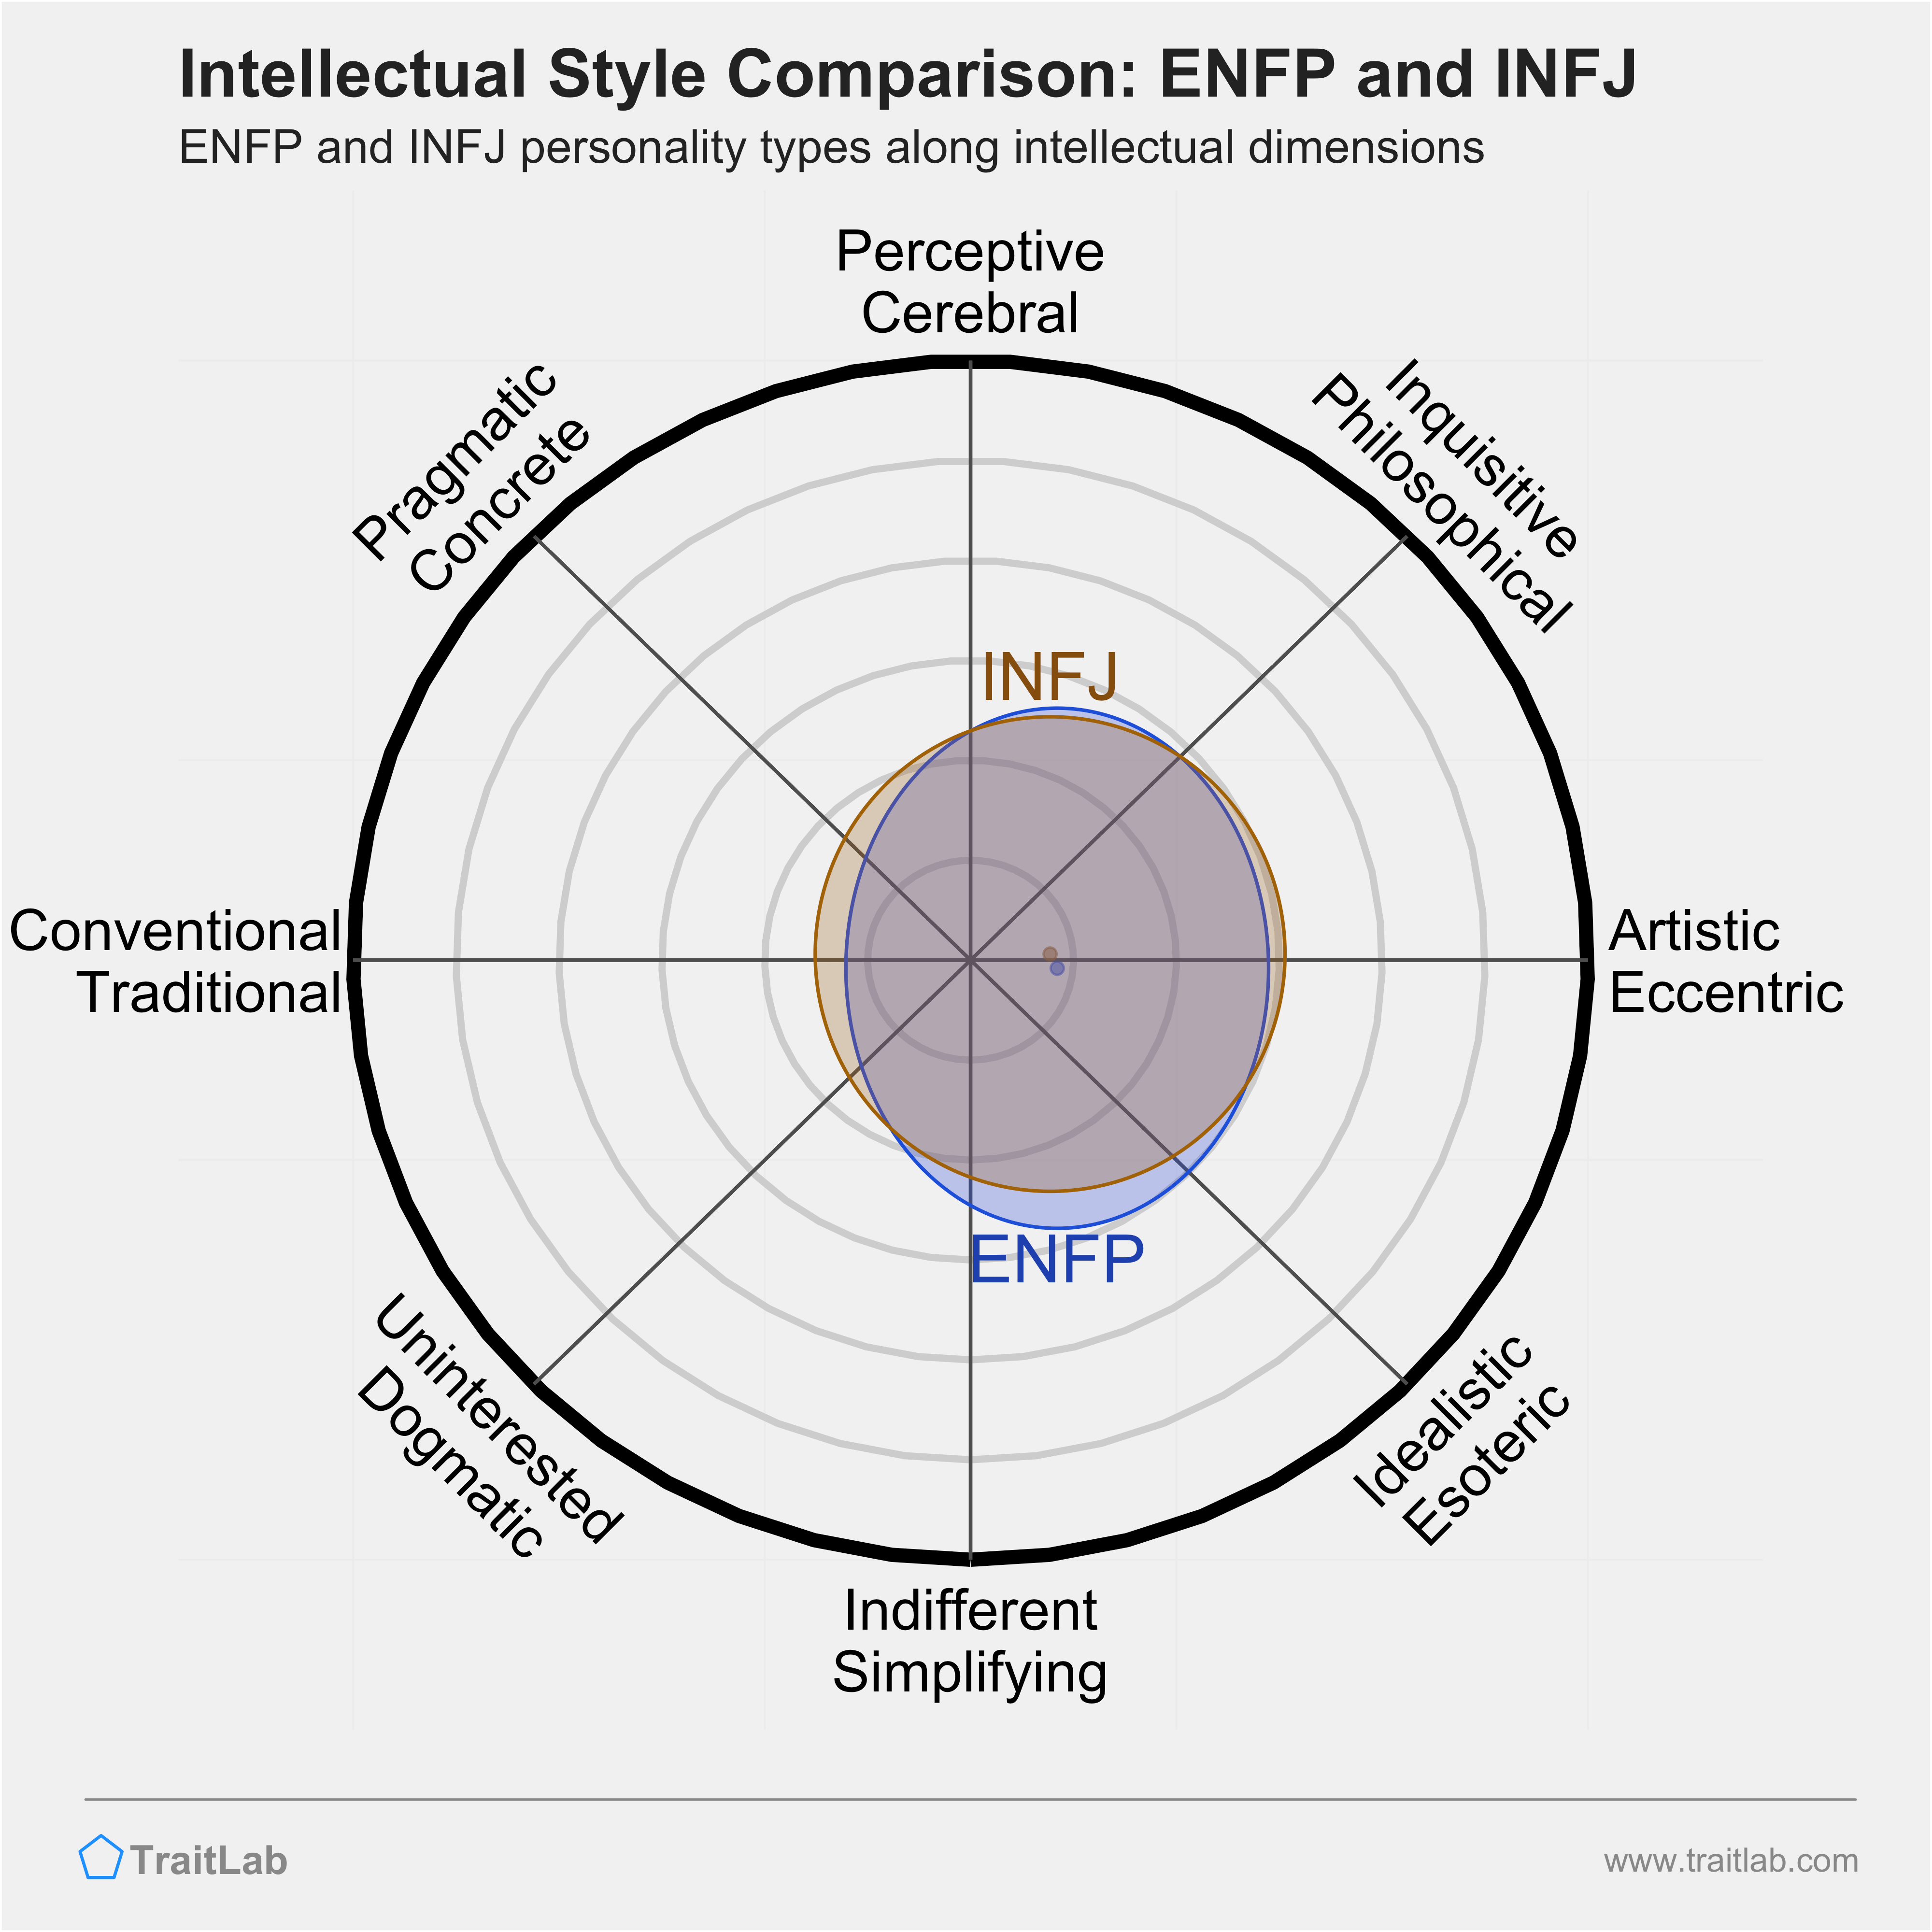 ENFP and INFJ comparison across intellectual dimensions